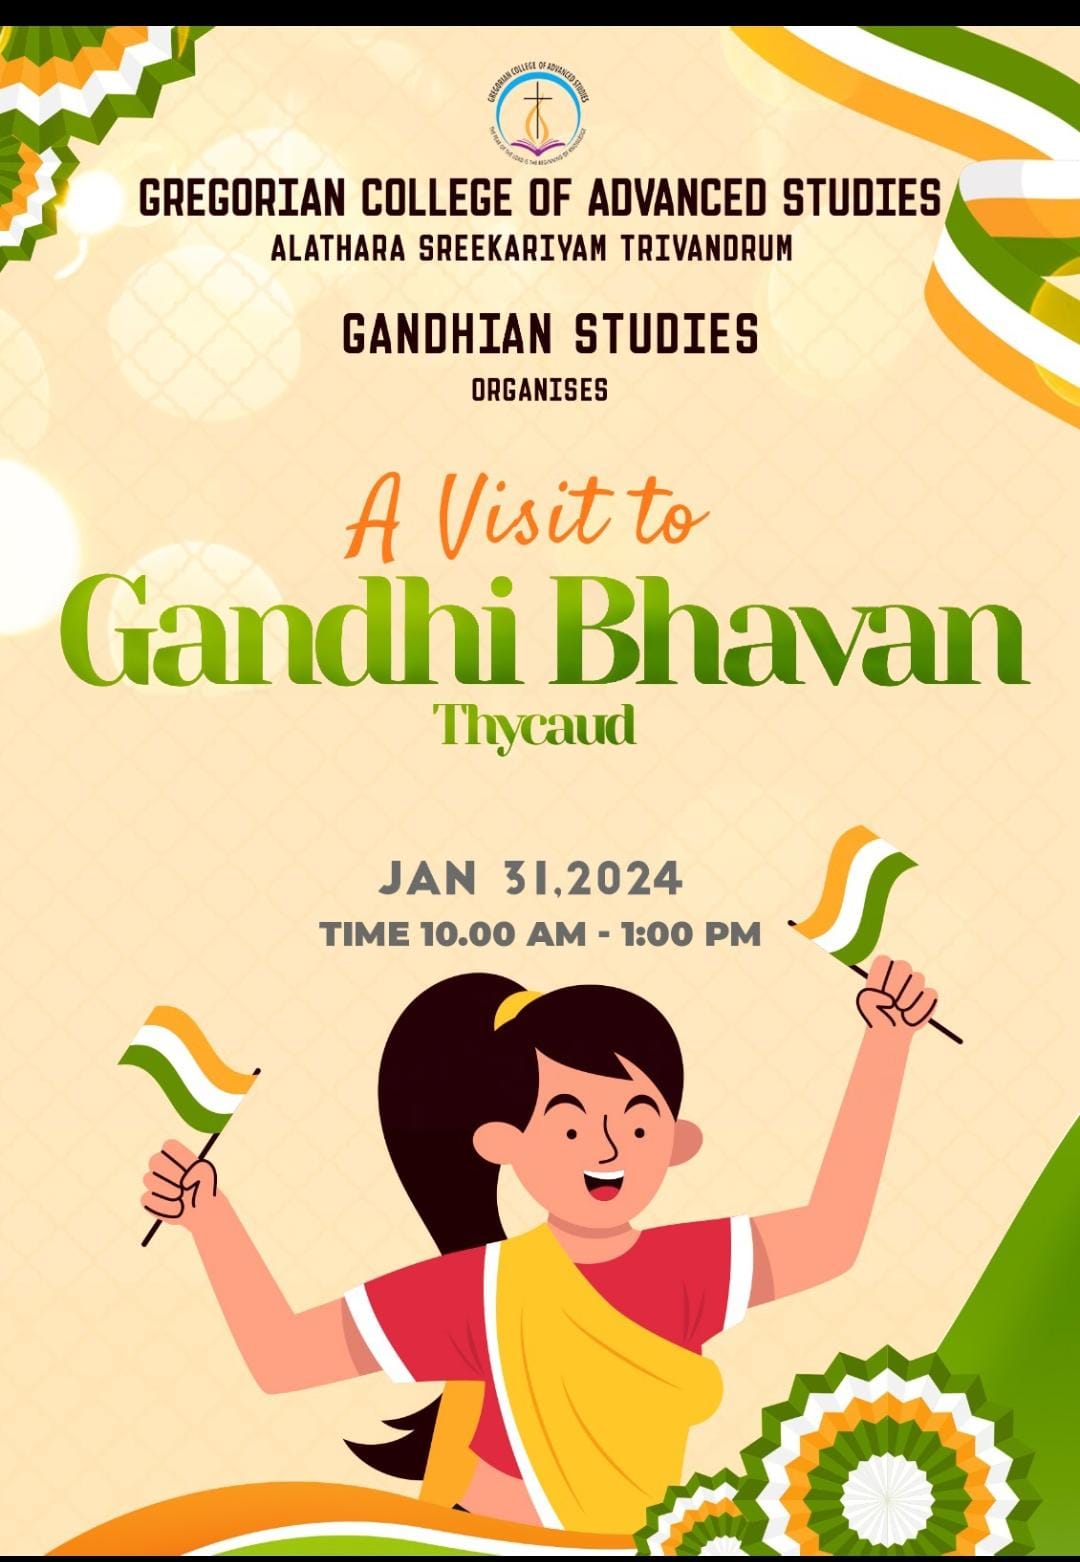 Gandhian Studies Club, GCAS organized a visit to Gandhi Bhavan, Thycaud